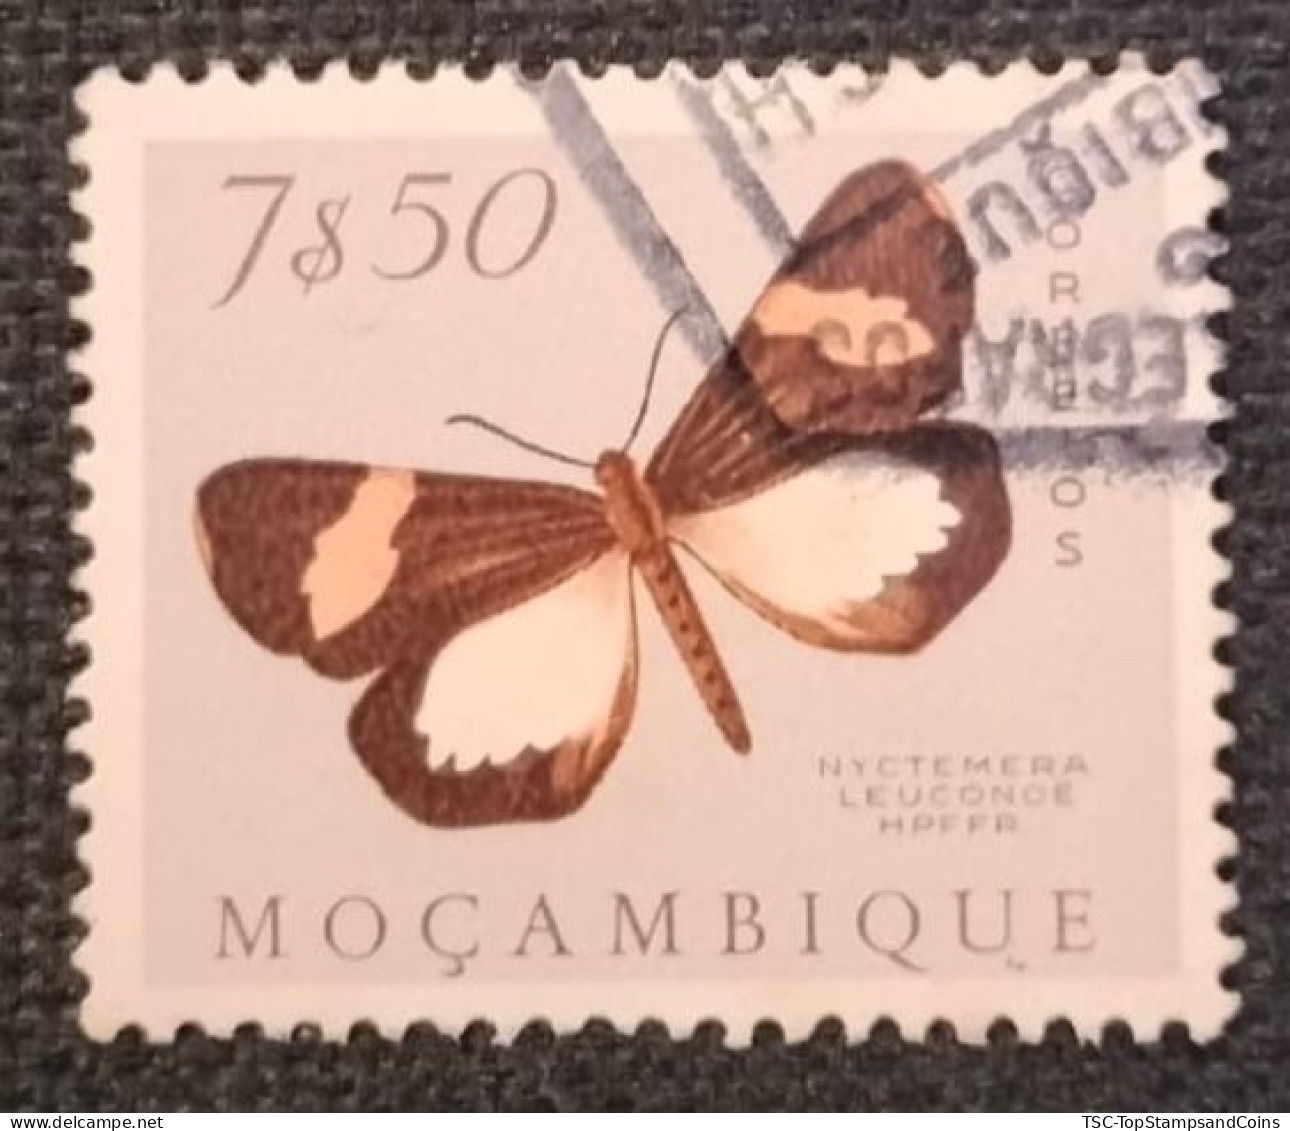 MOZPO0405UD - Mozambique Butterflies - 7$50 Used Stamp - Mozambique - 1953 - Mozambique